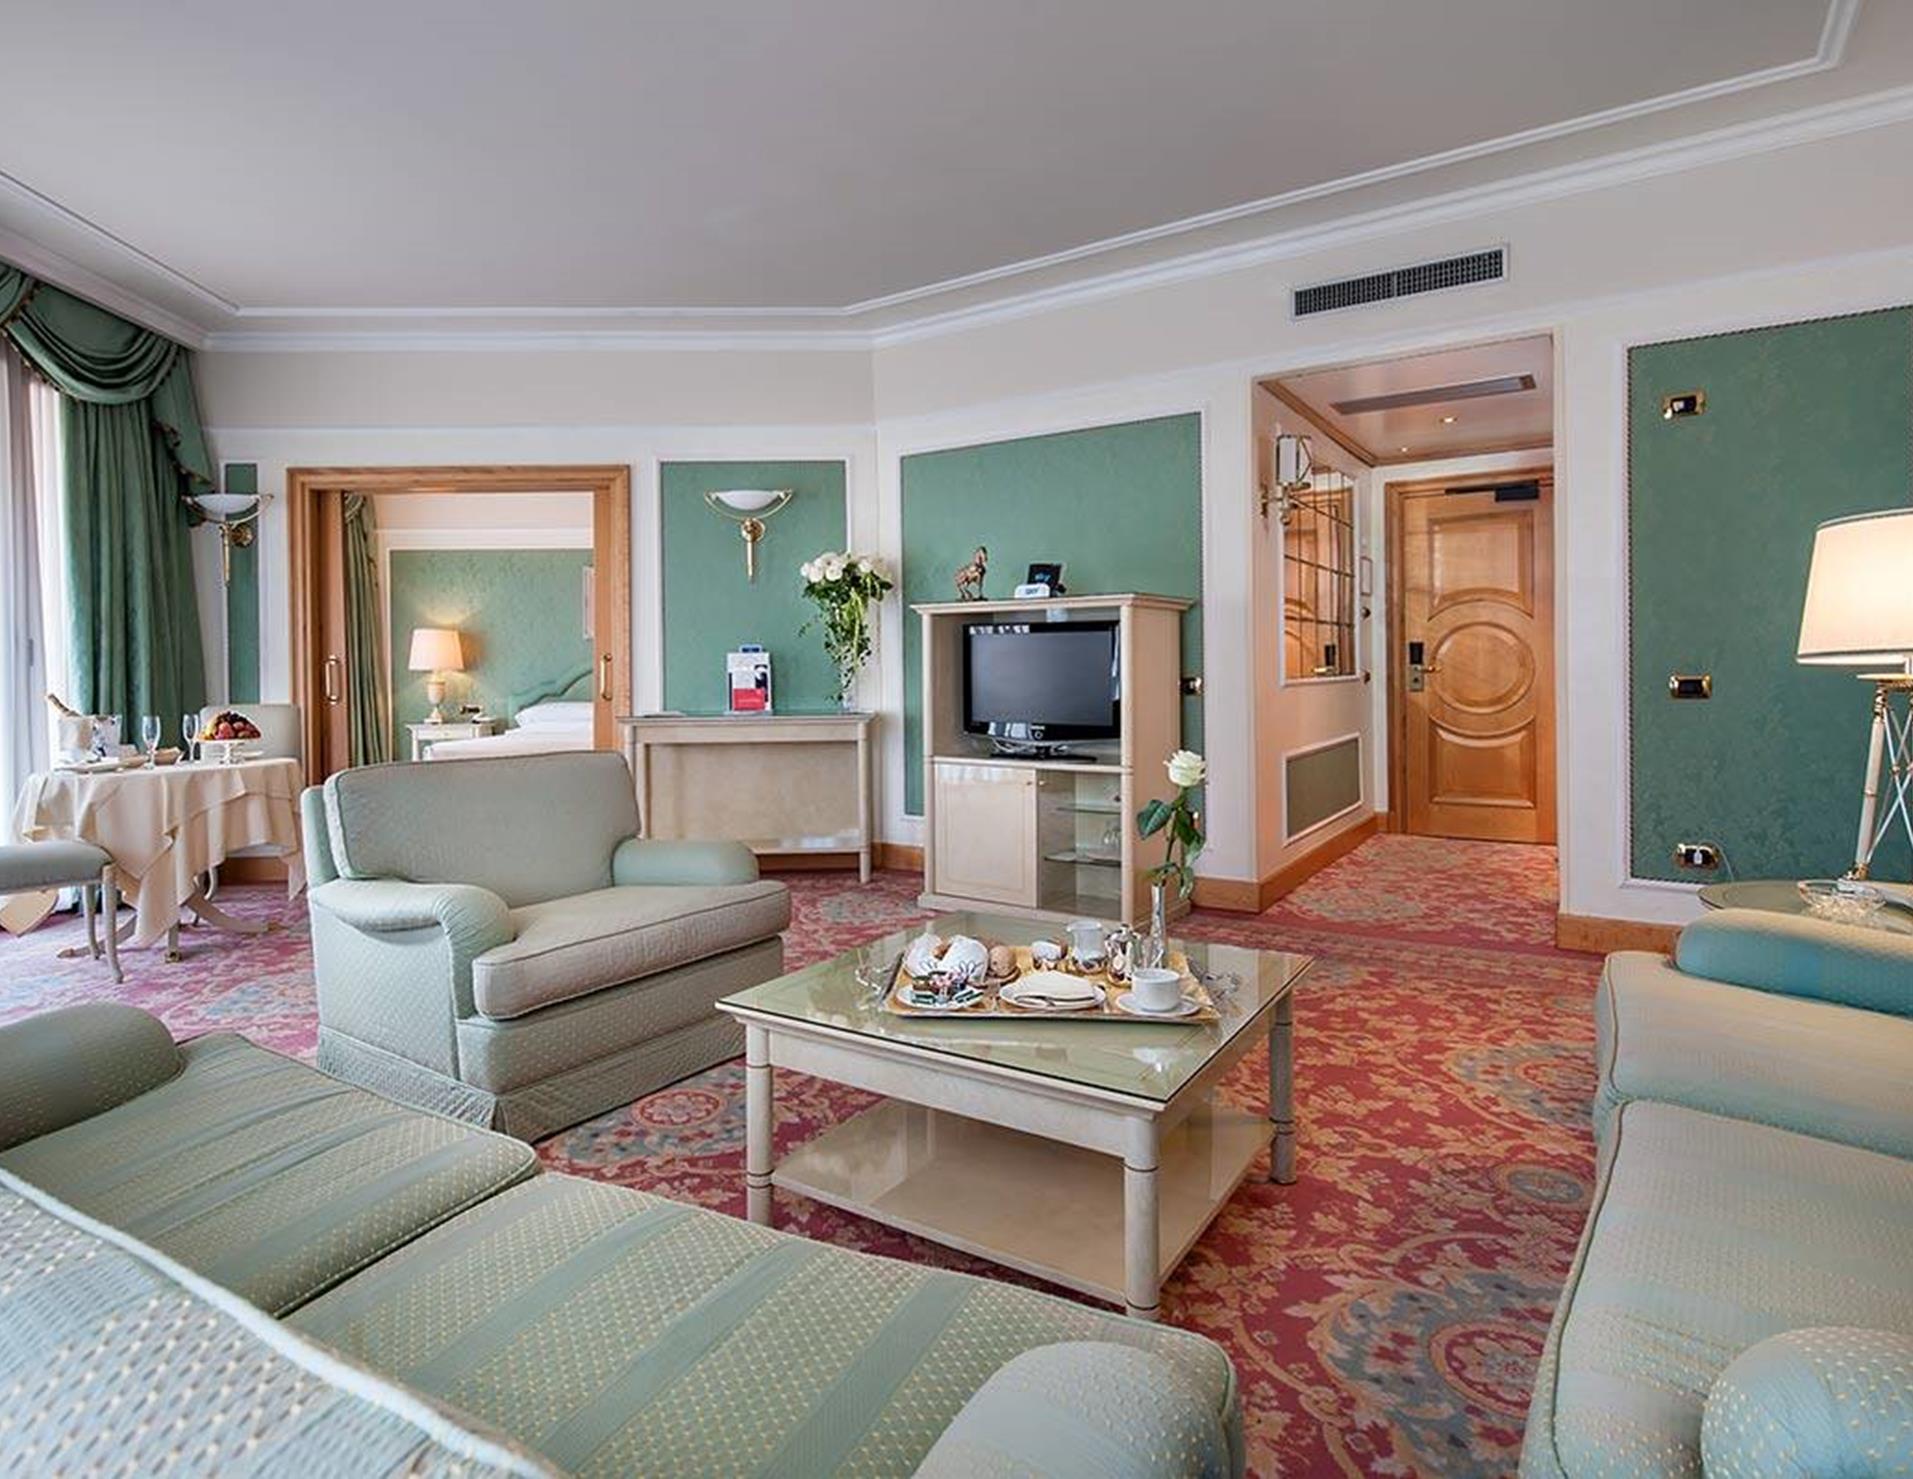 Royal Hotel Carlton - Room 5